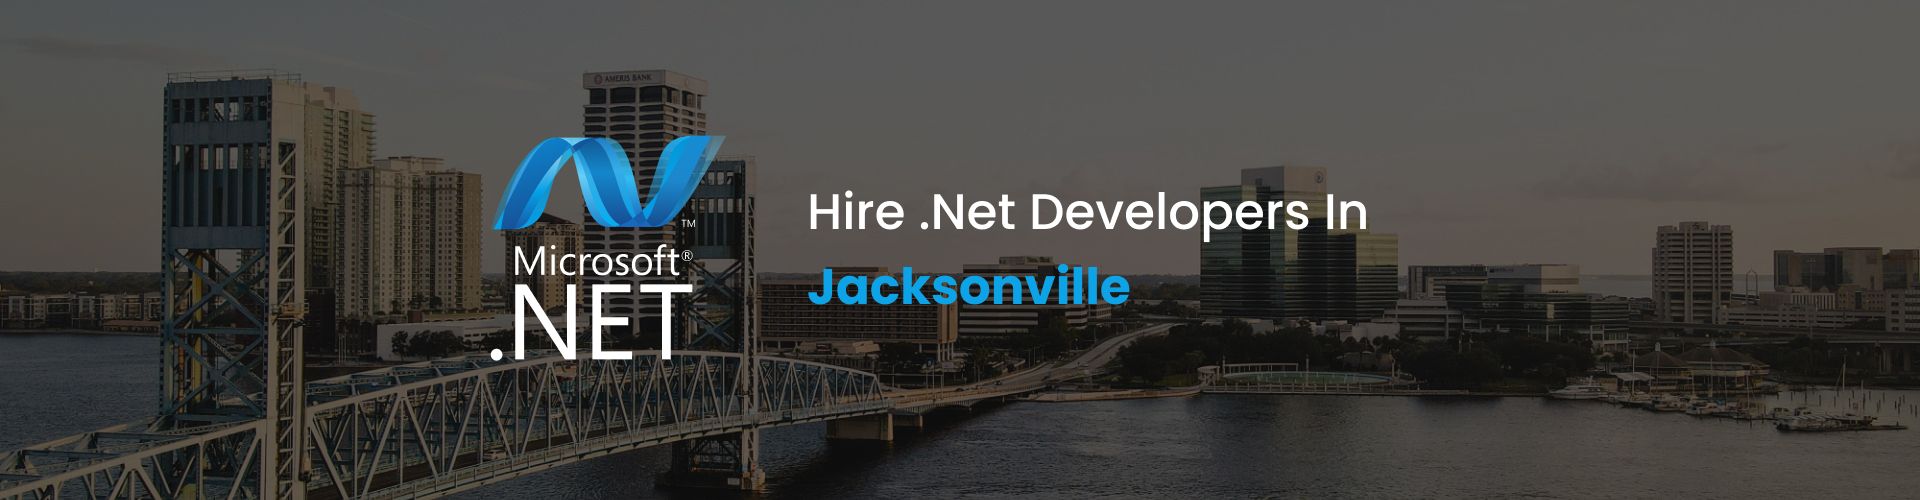 hire .net developers in jacksonville